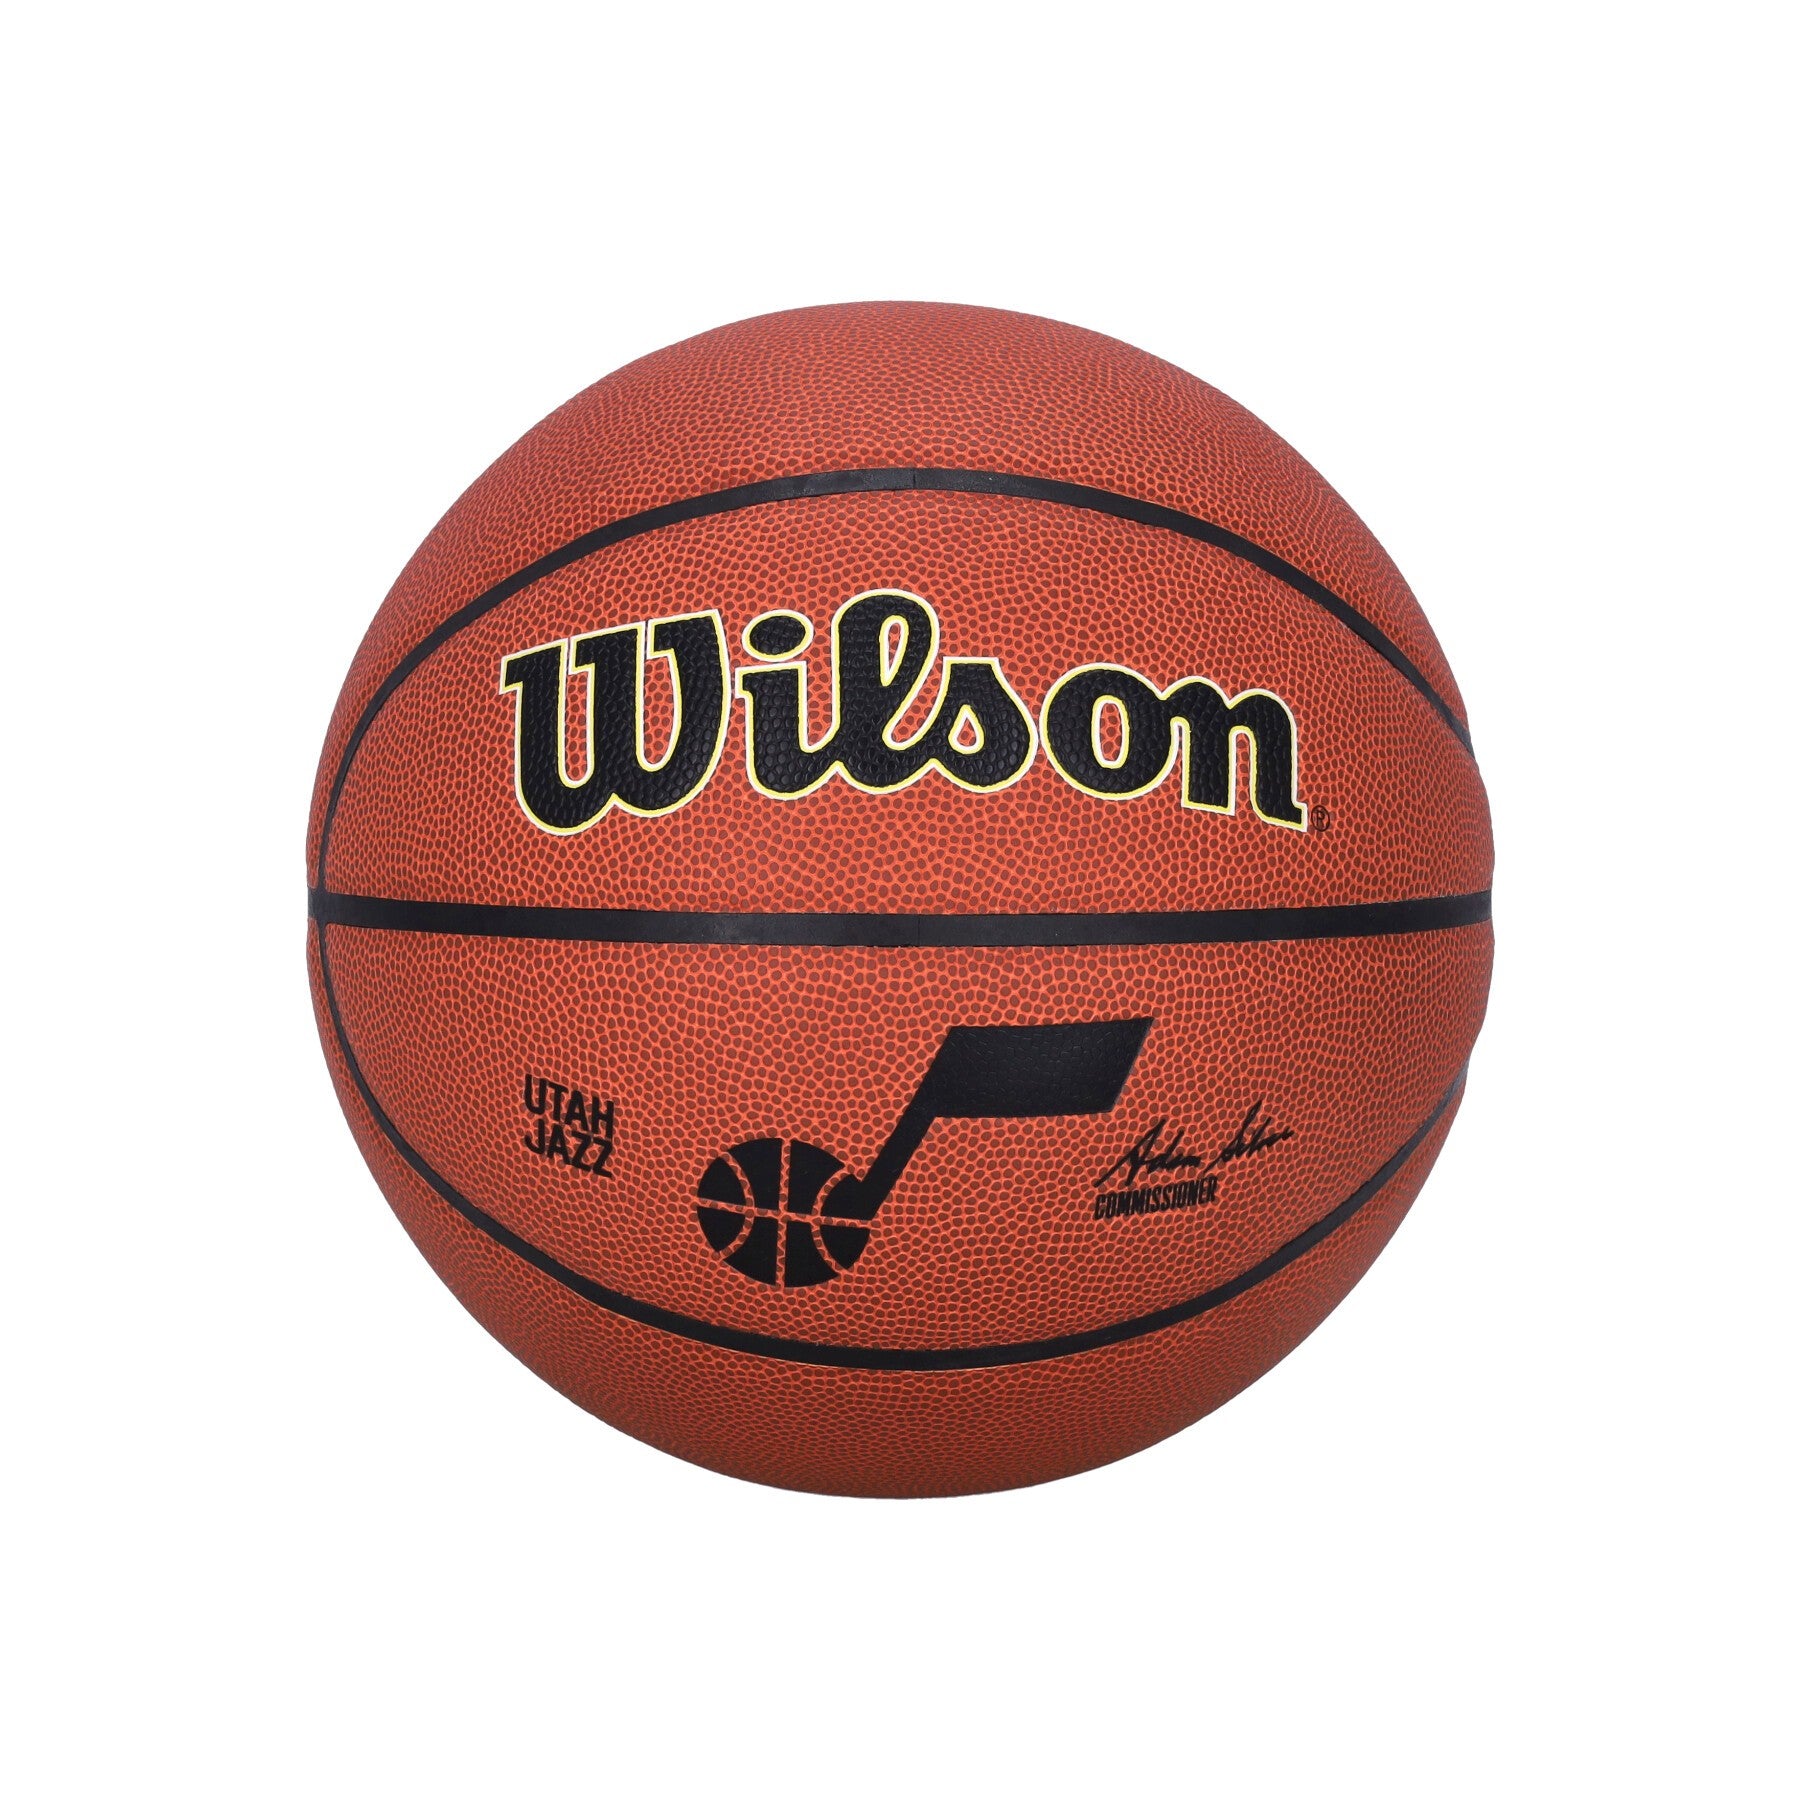 Wilson Team, Pallone Uomo Nba Team Alliance Basketball Size 7 Utajaz, Brown/original Team Colors